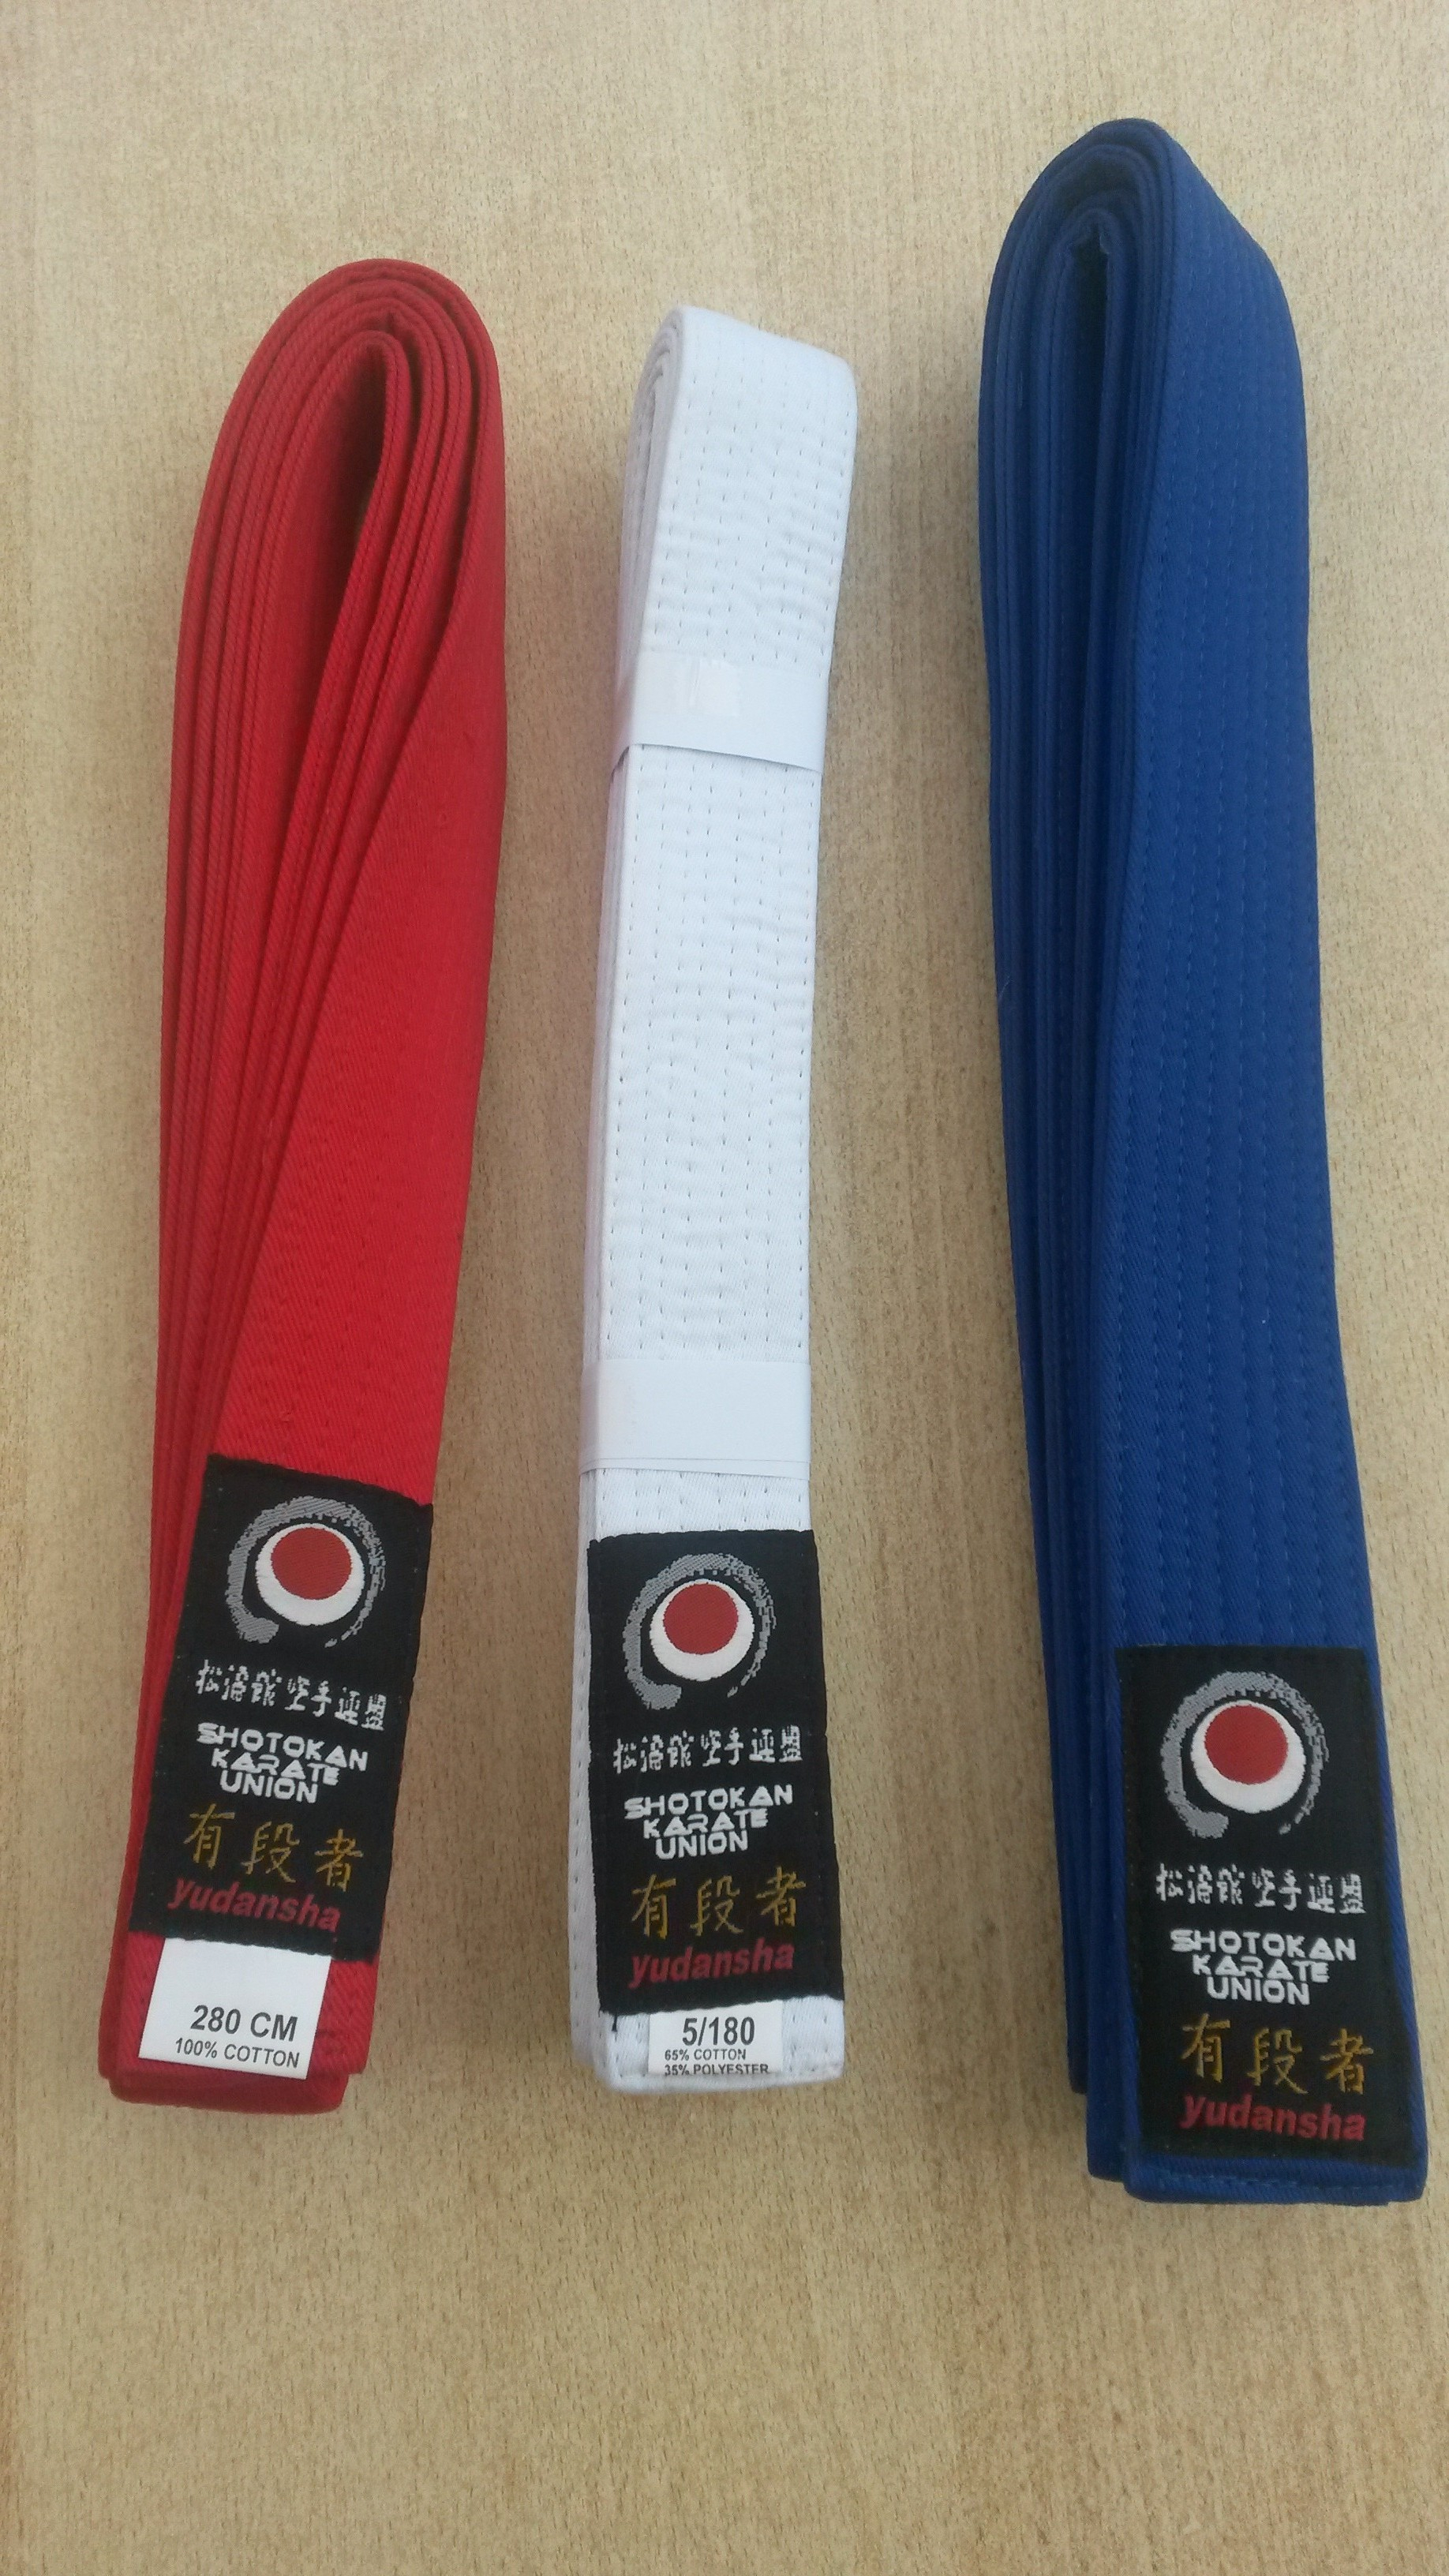 SKU YUDANSHA BRAND COLOURED BELTS Shotokan Karate Union 松涛館 空手連盟